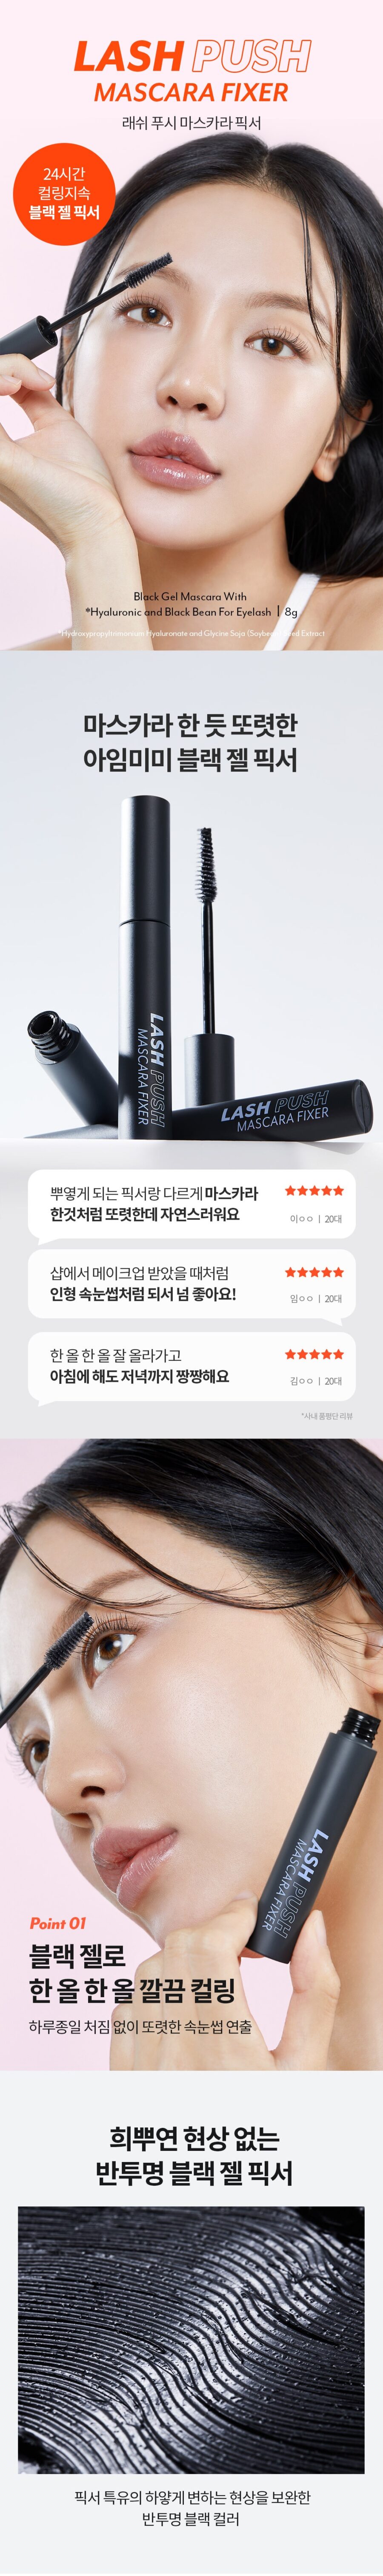 MEMEBOX Lash Push Mascara Fixer korean skincare product online shop malaysia china macau1